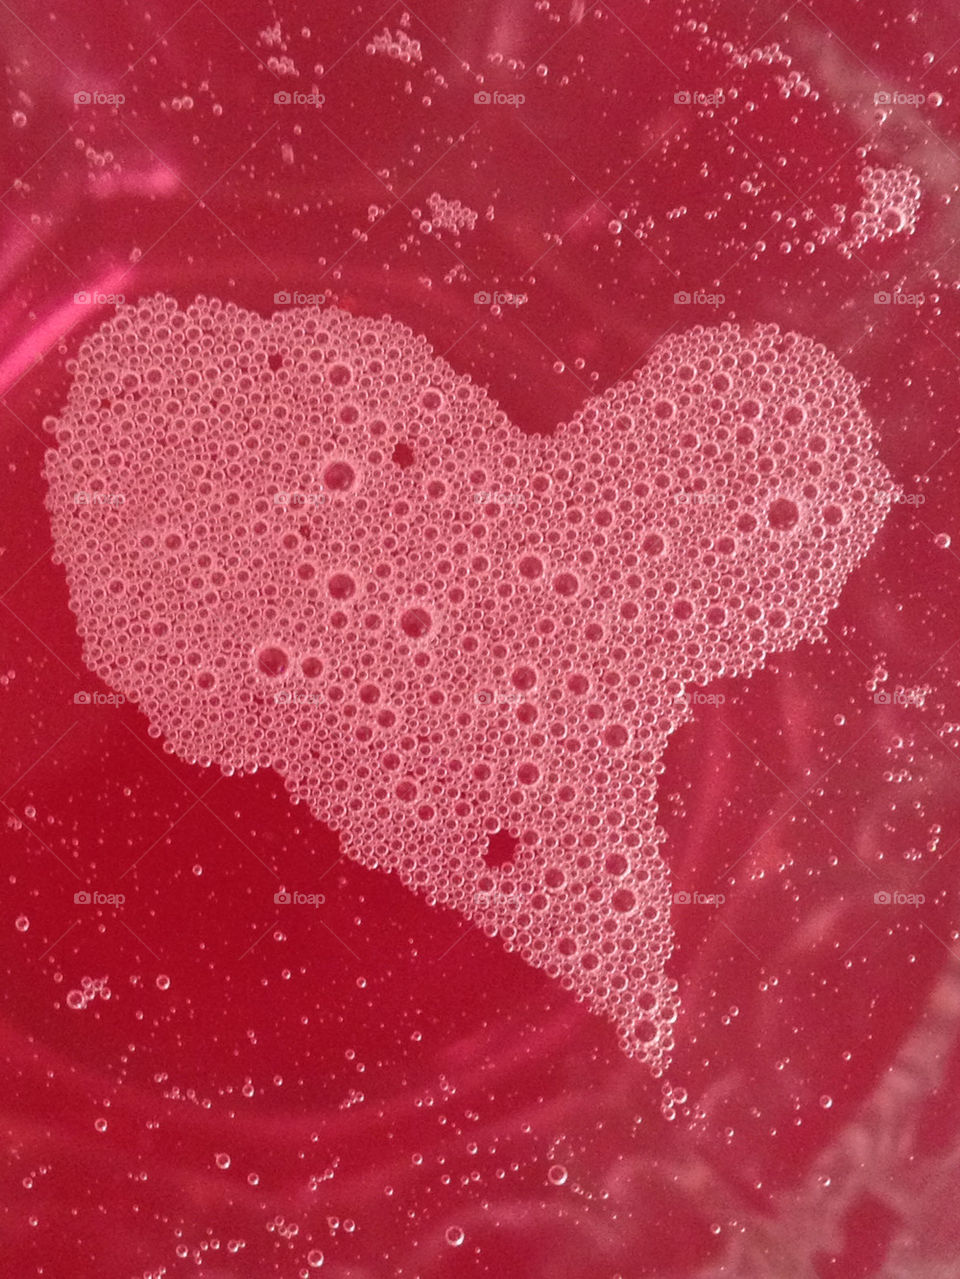 red heart love bubbles by ev77